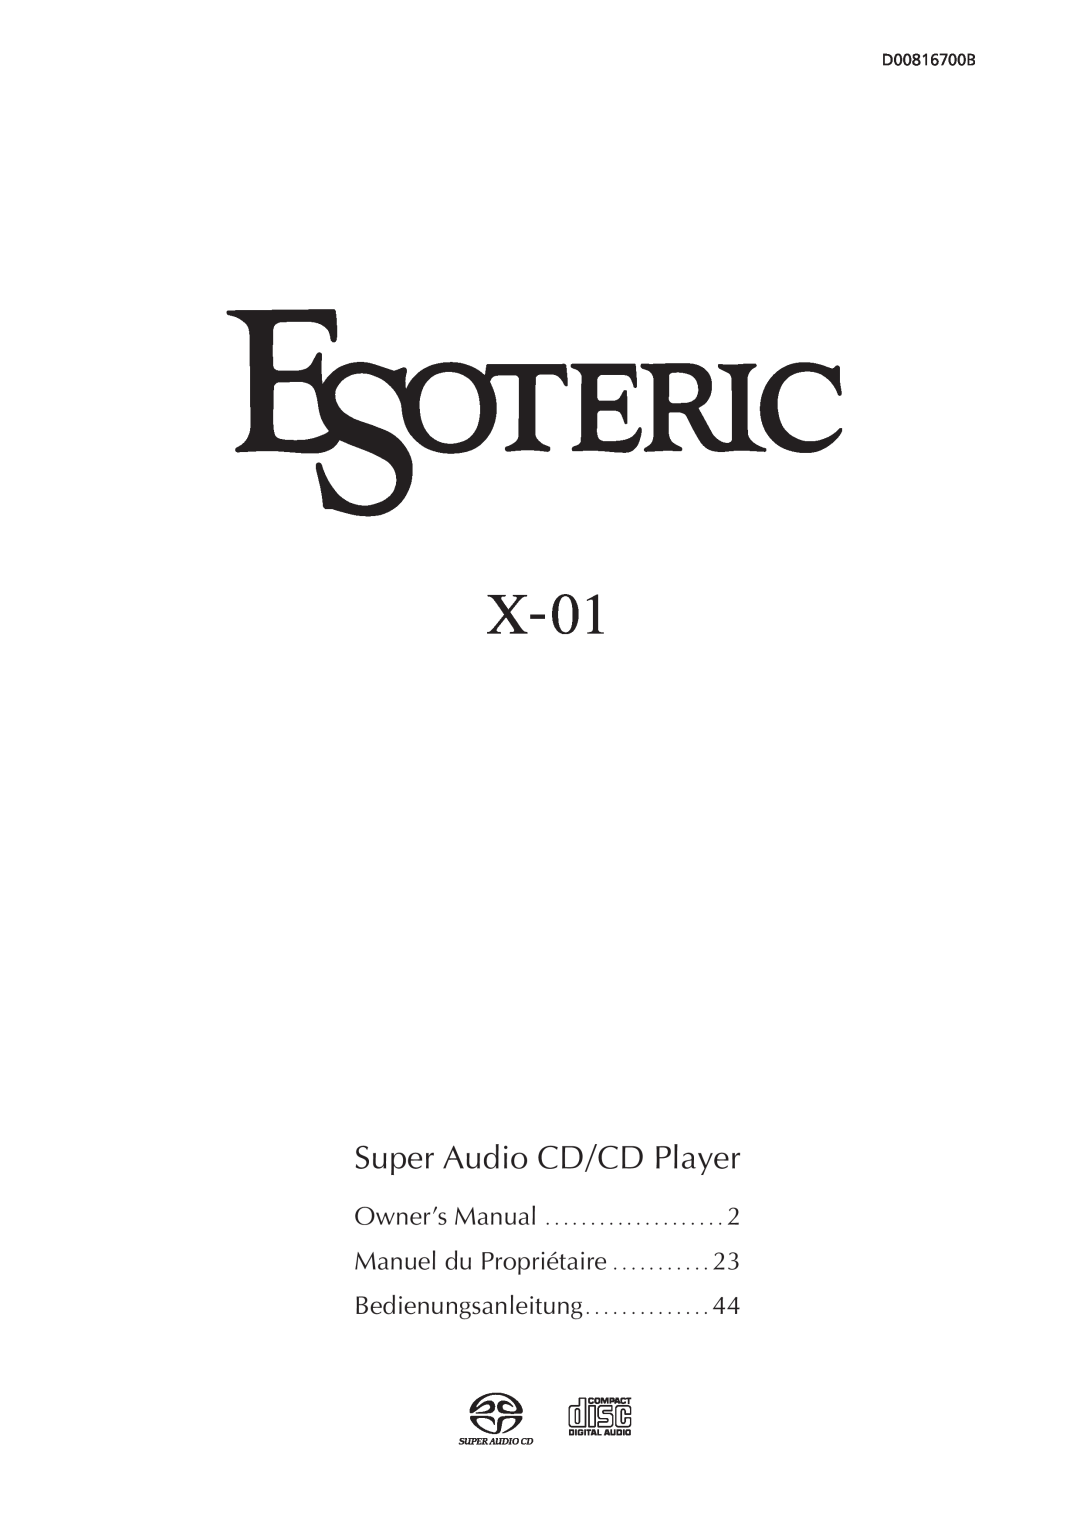 Esoteric D00816700B manual Super Audio CD/CD Player, Manuel du Propriétaire, Owner’s Manual, Bedienungsanleitung 